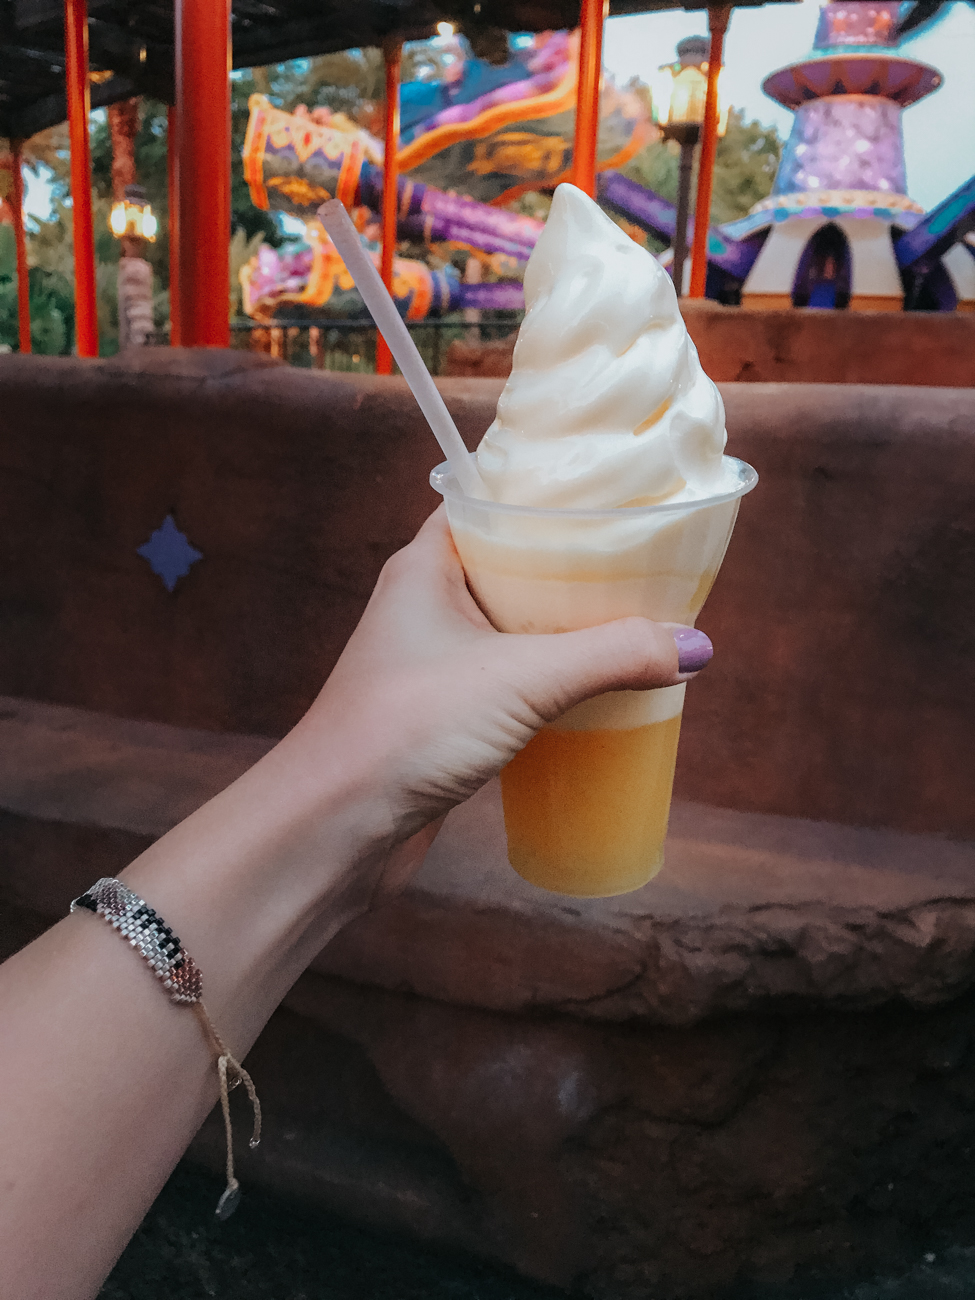 Dole Whip Frozen Dessert from Aloha Isle at Walt Disney World's Magic Kingdom